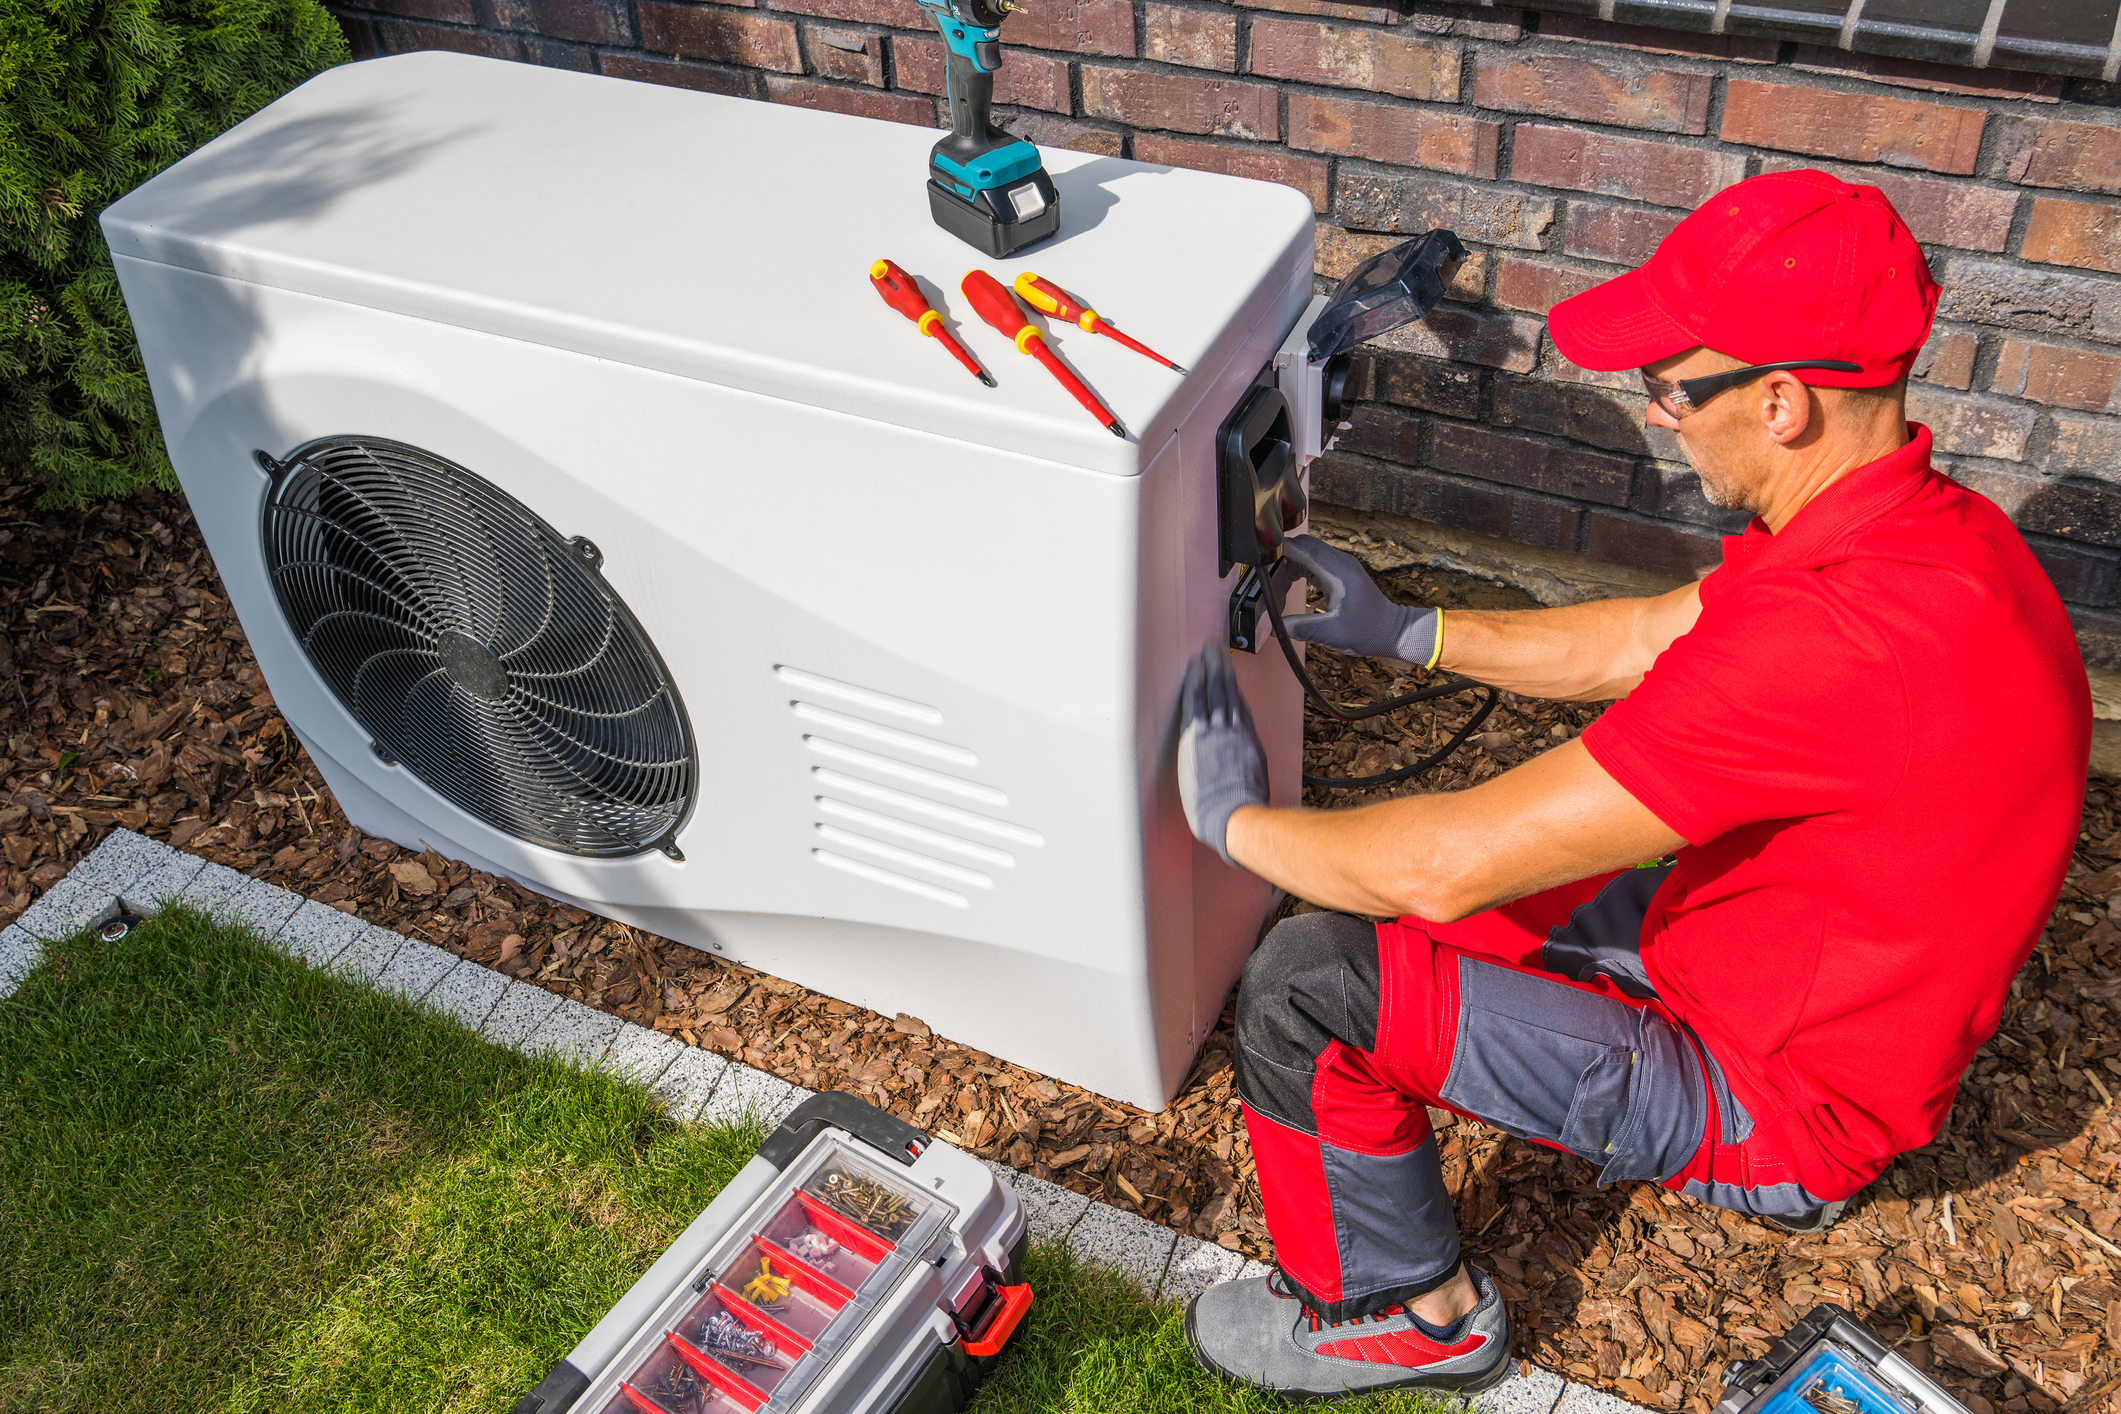 Professional Middle Aged HVAC Technician in Red Uniform Repairing Modern Heat Pump Unit